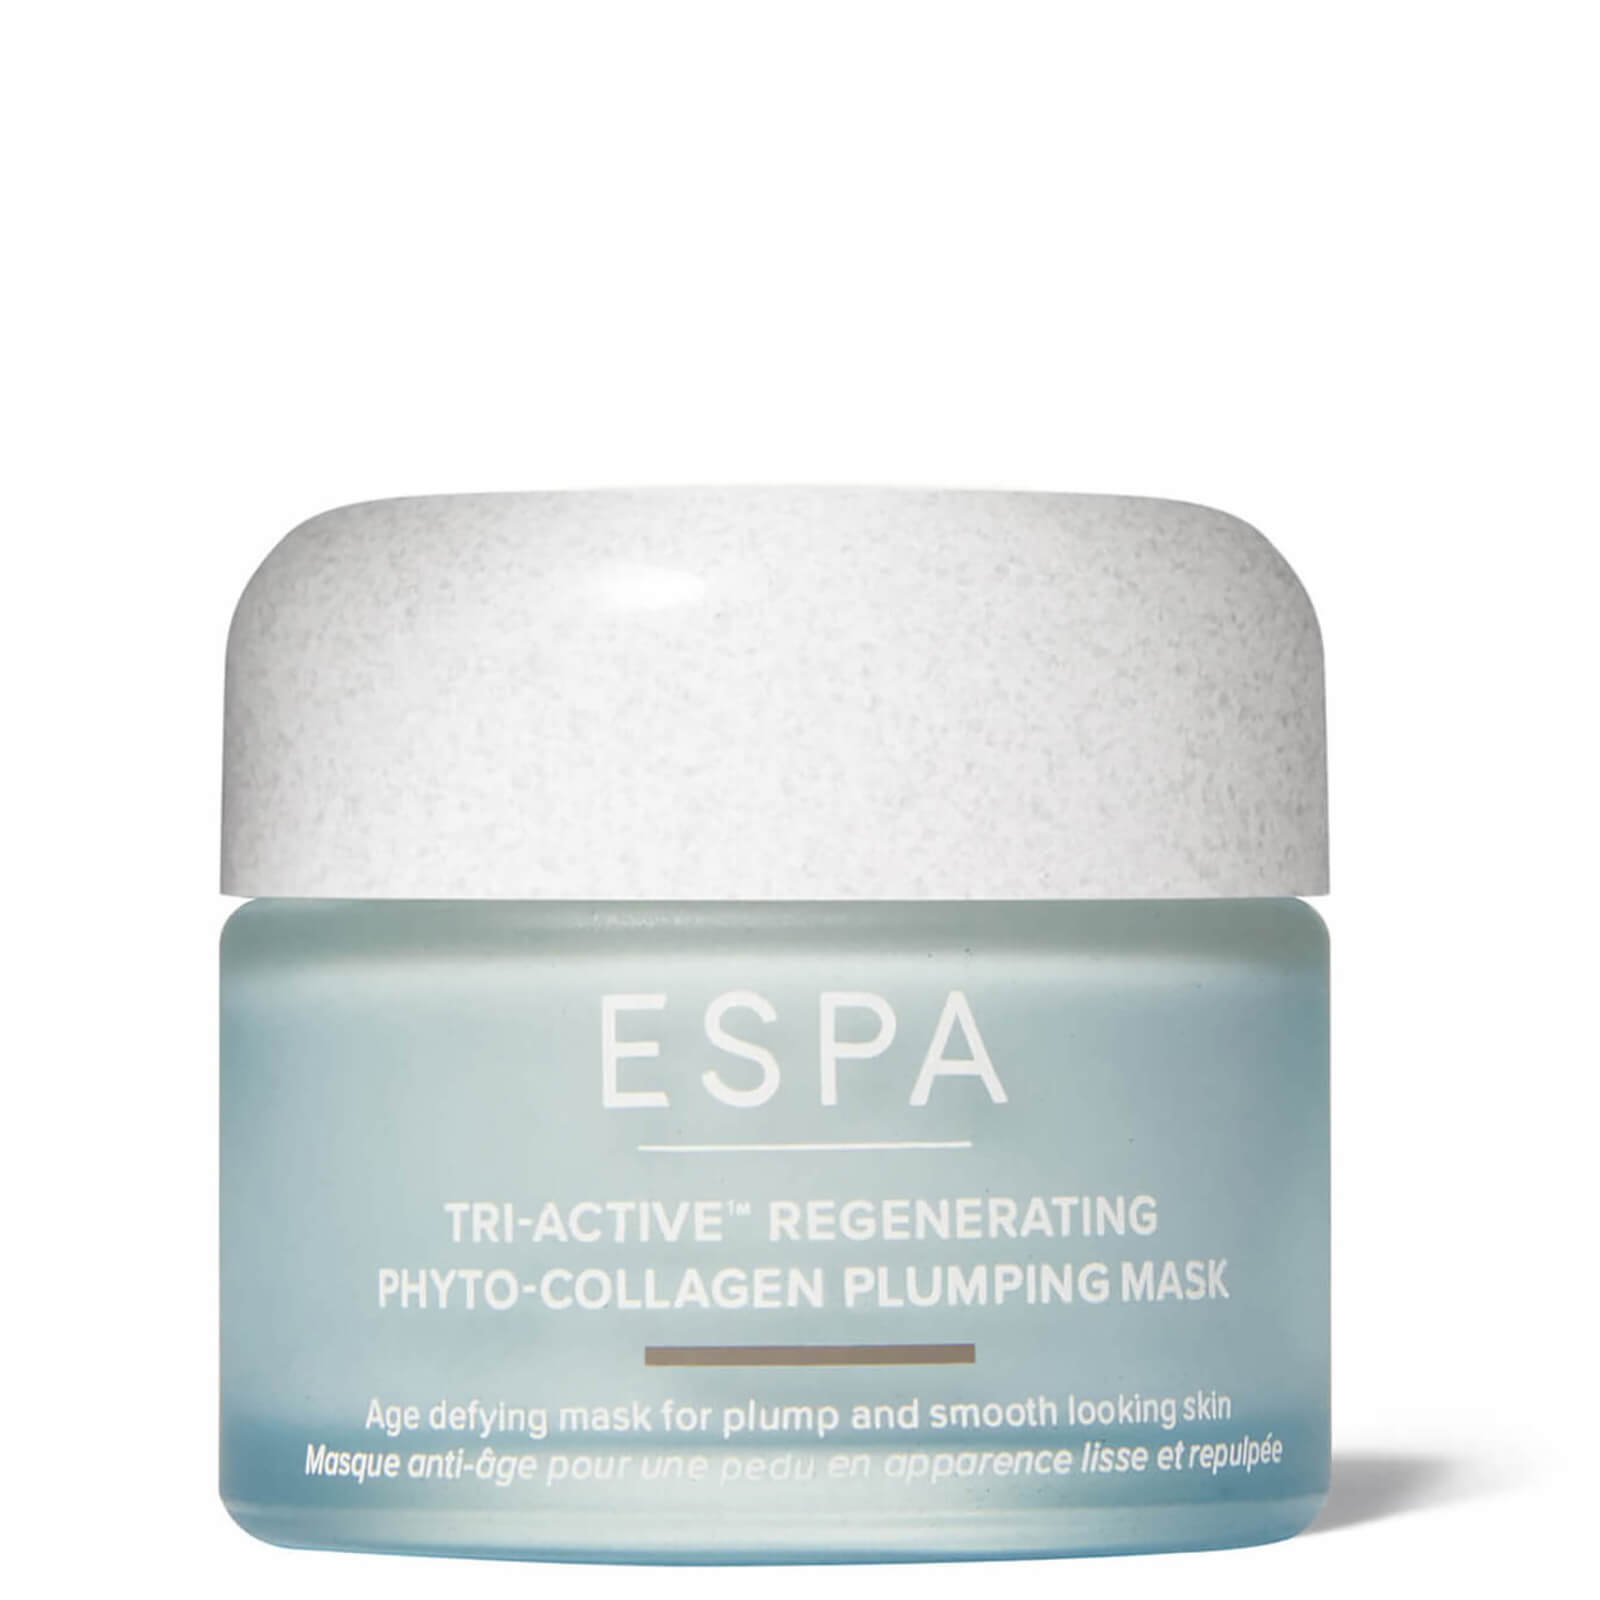 Espa Tri-active™ Regenerating Phyto-collagen Plumping Mask